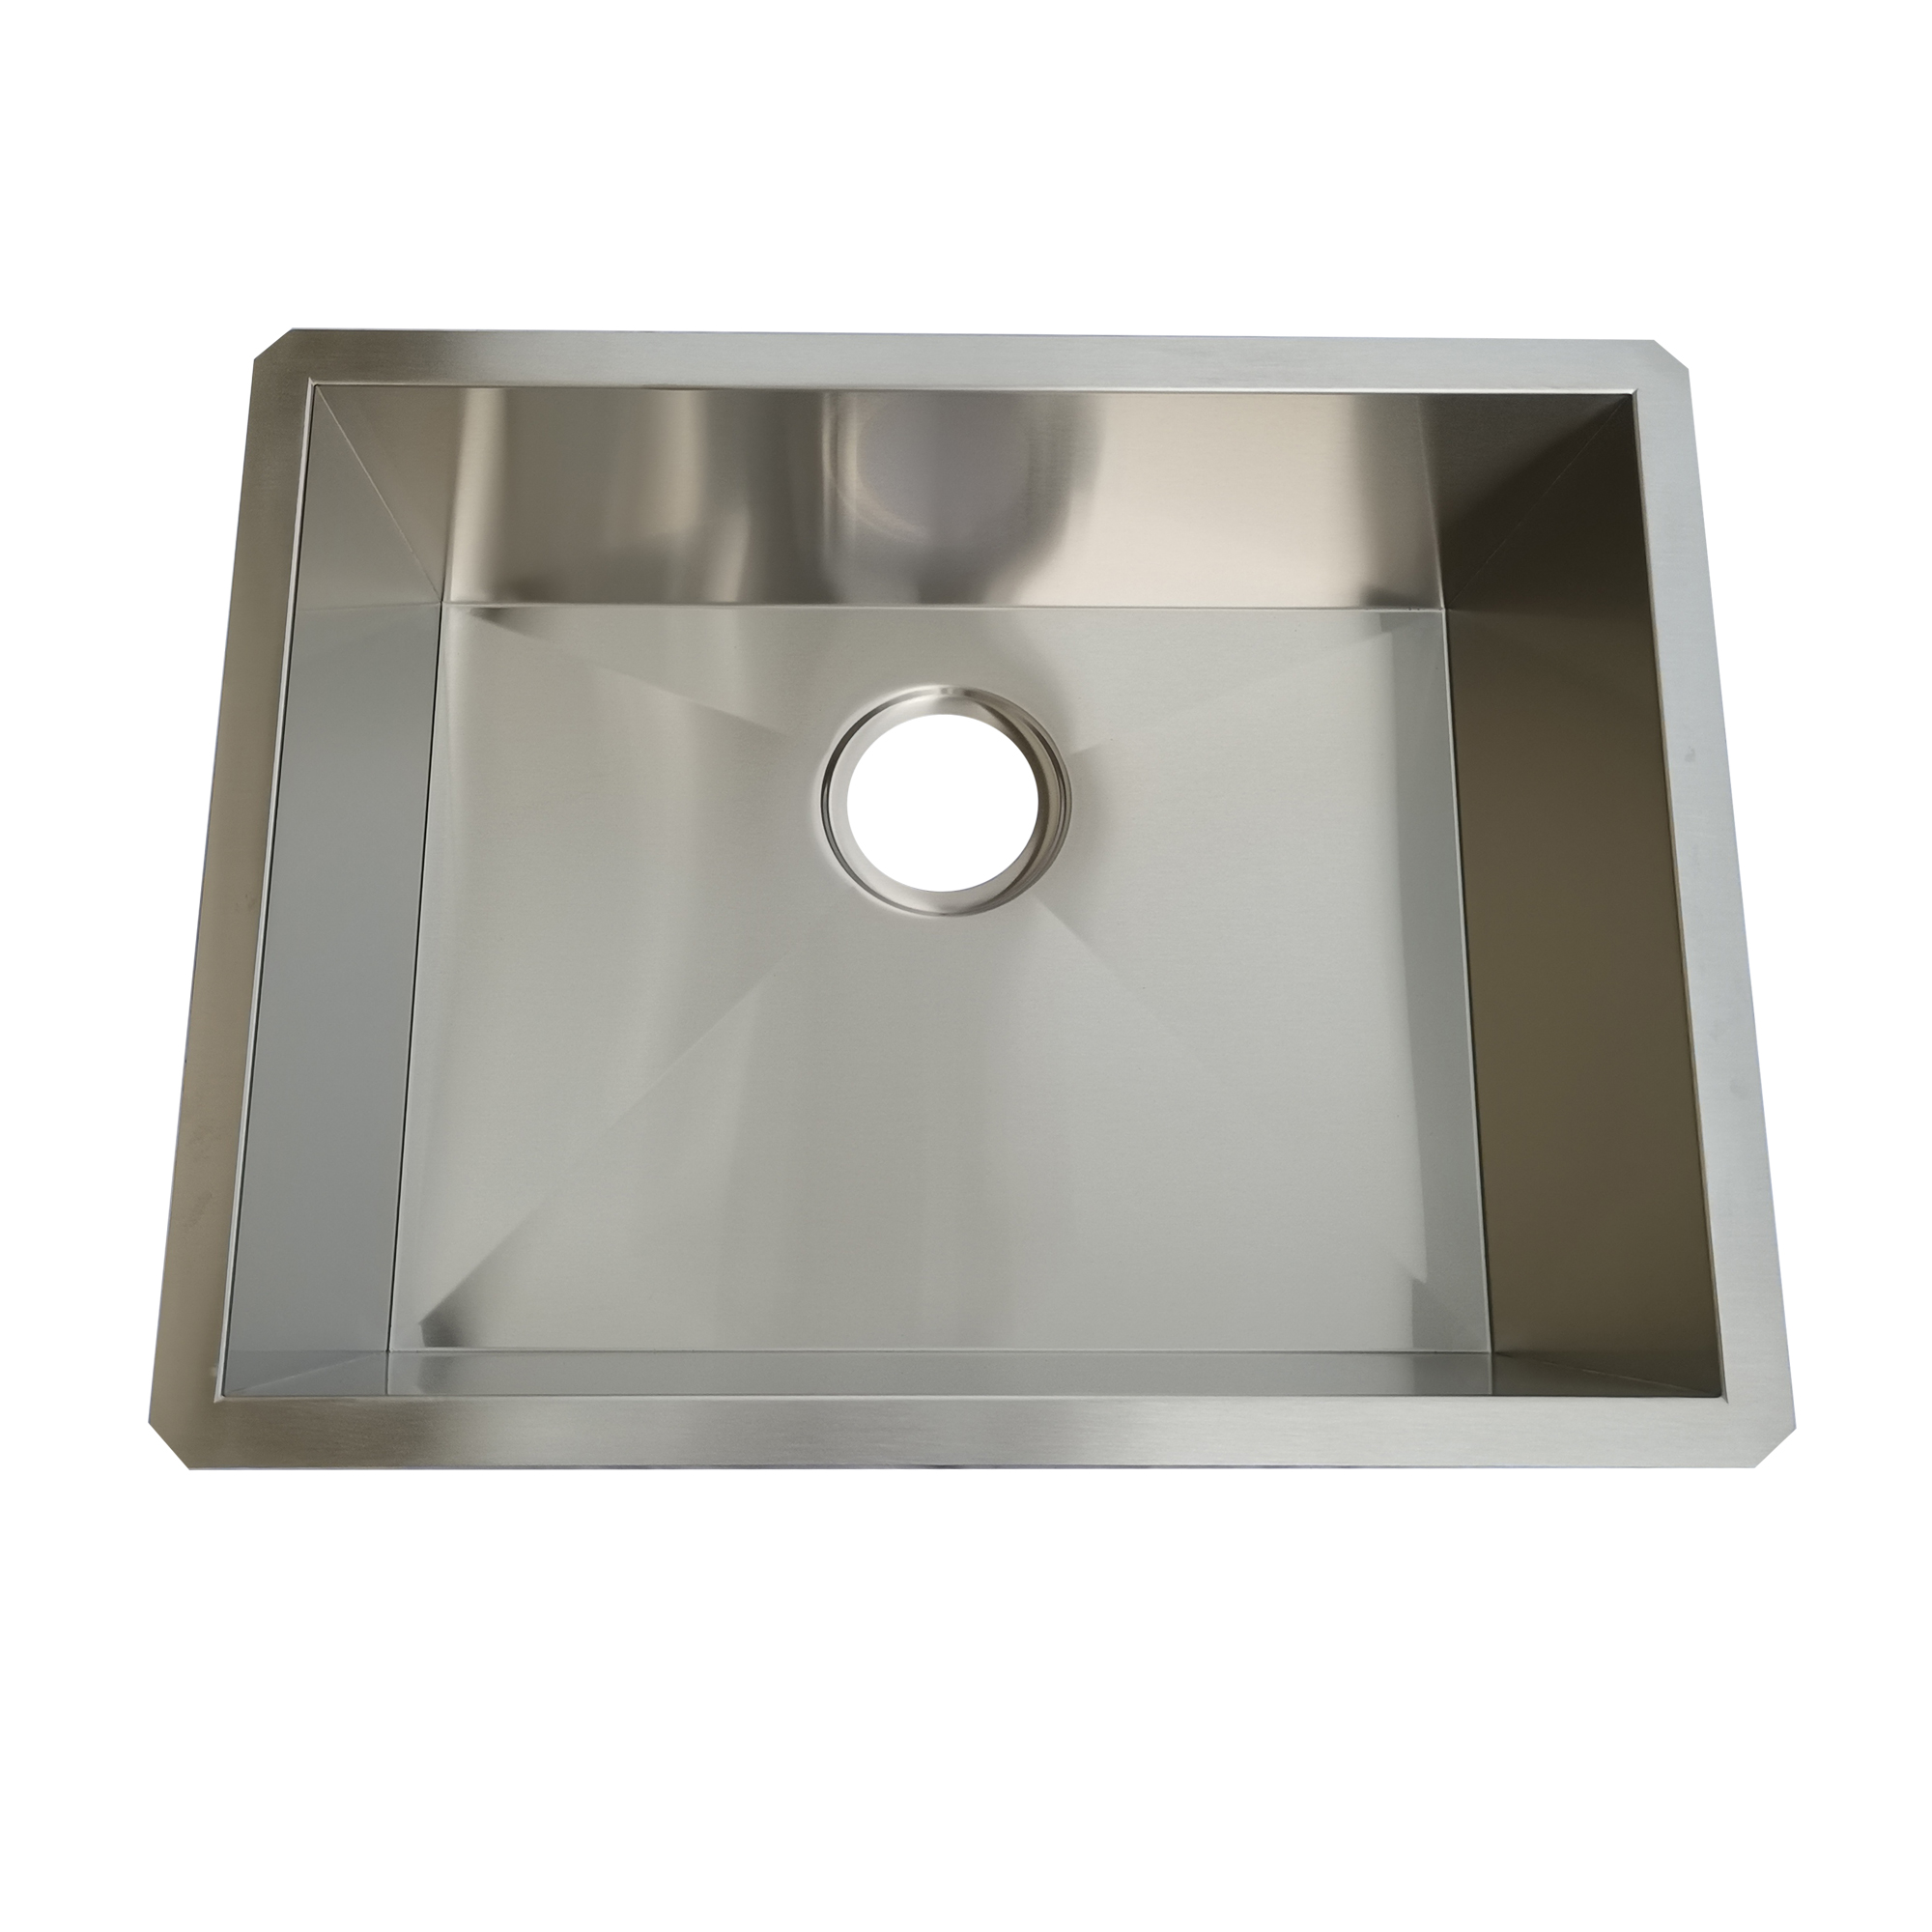 Granite sink set: DRGM48/78HA + kitchen mixer BZA4B